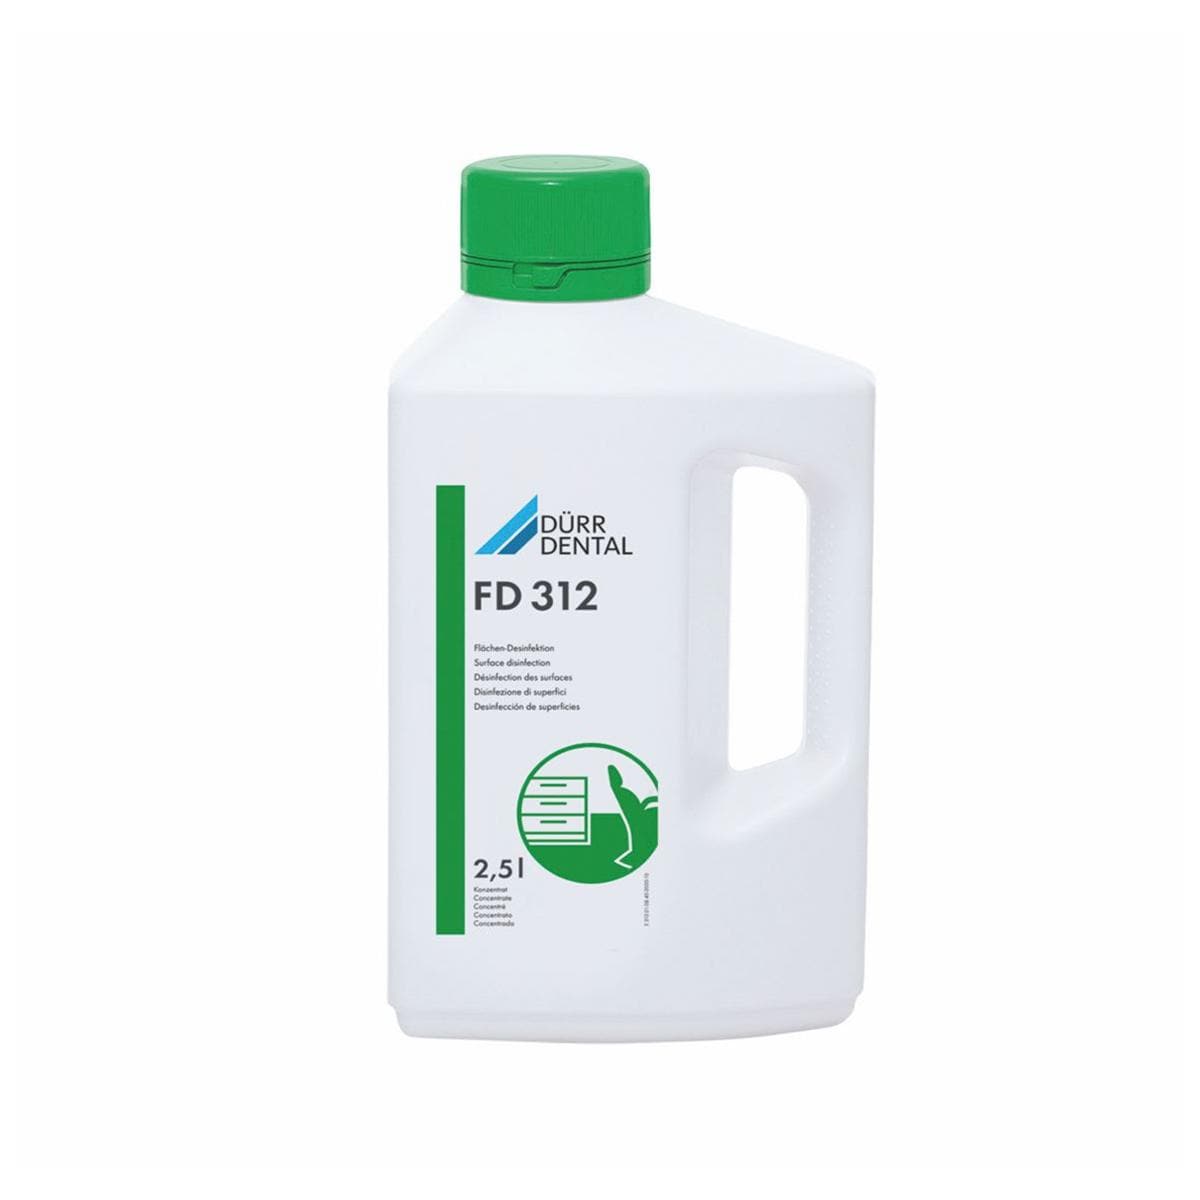 FD 312 Surface Disinfectant 2.5L